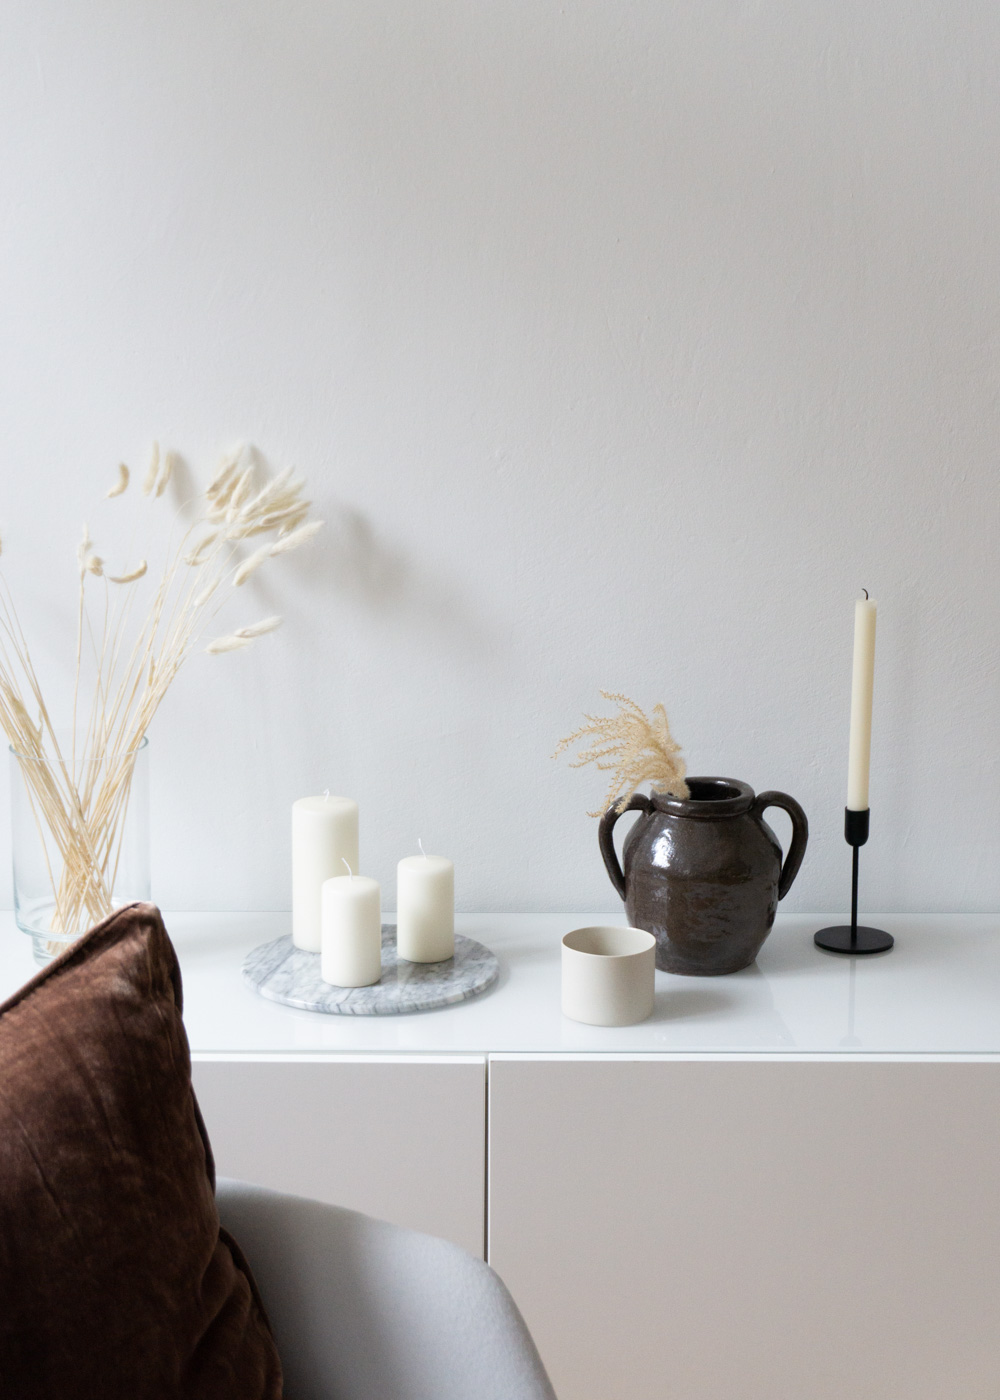 Beige Decor Details, Earthy Ceramics, Dried Flowers - Neutral Home, Scandinavian Aesthetic, Berlin Apartment, White Interior, Calm Lighting | RG Daily Blog